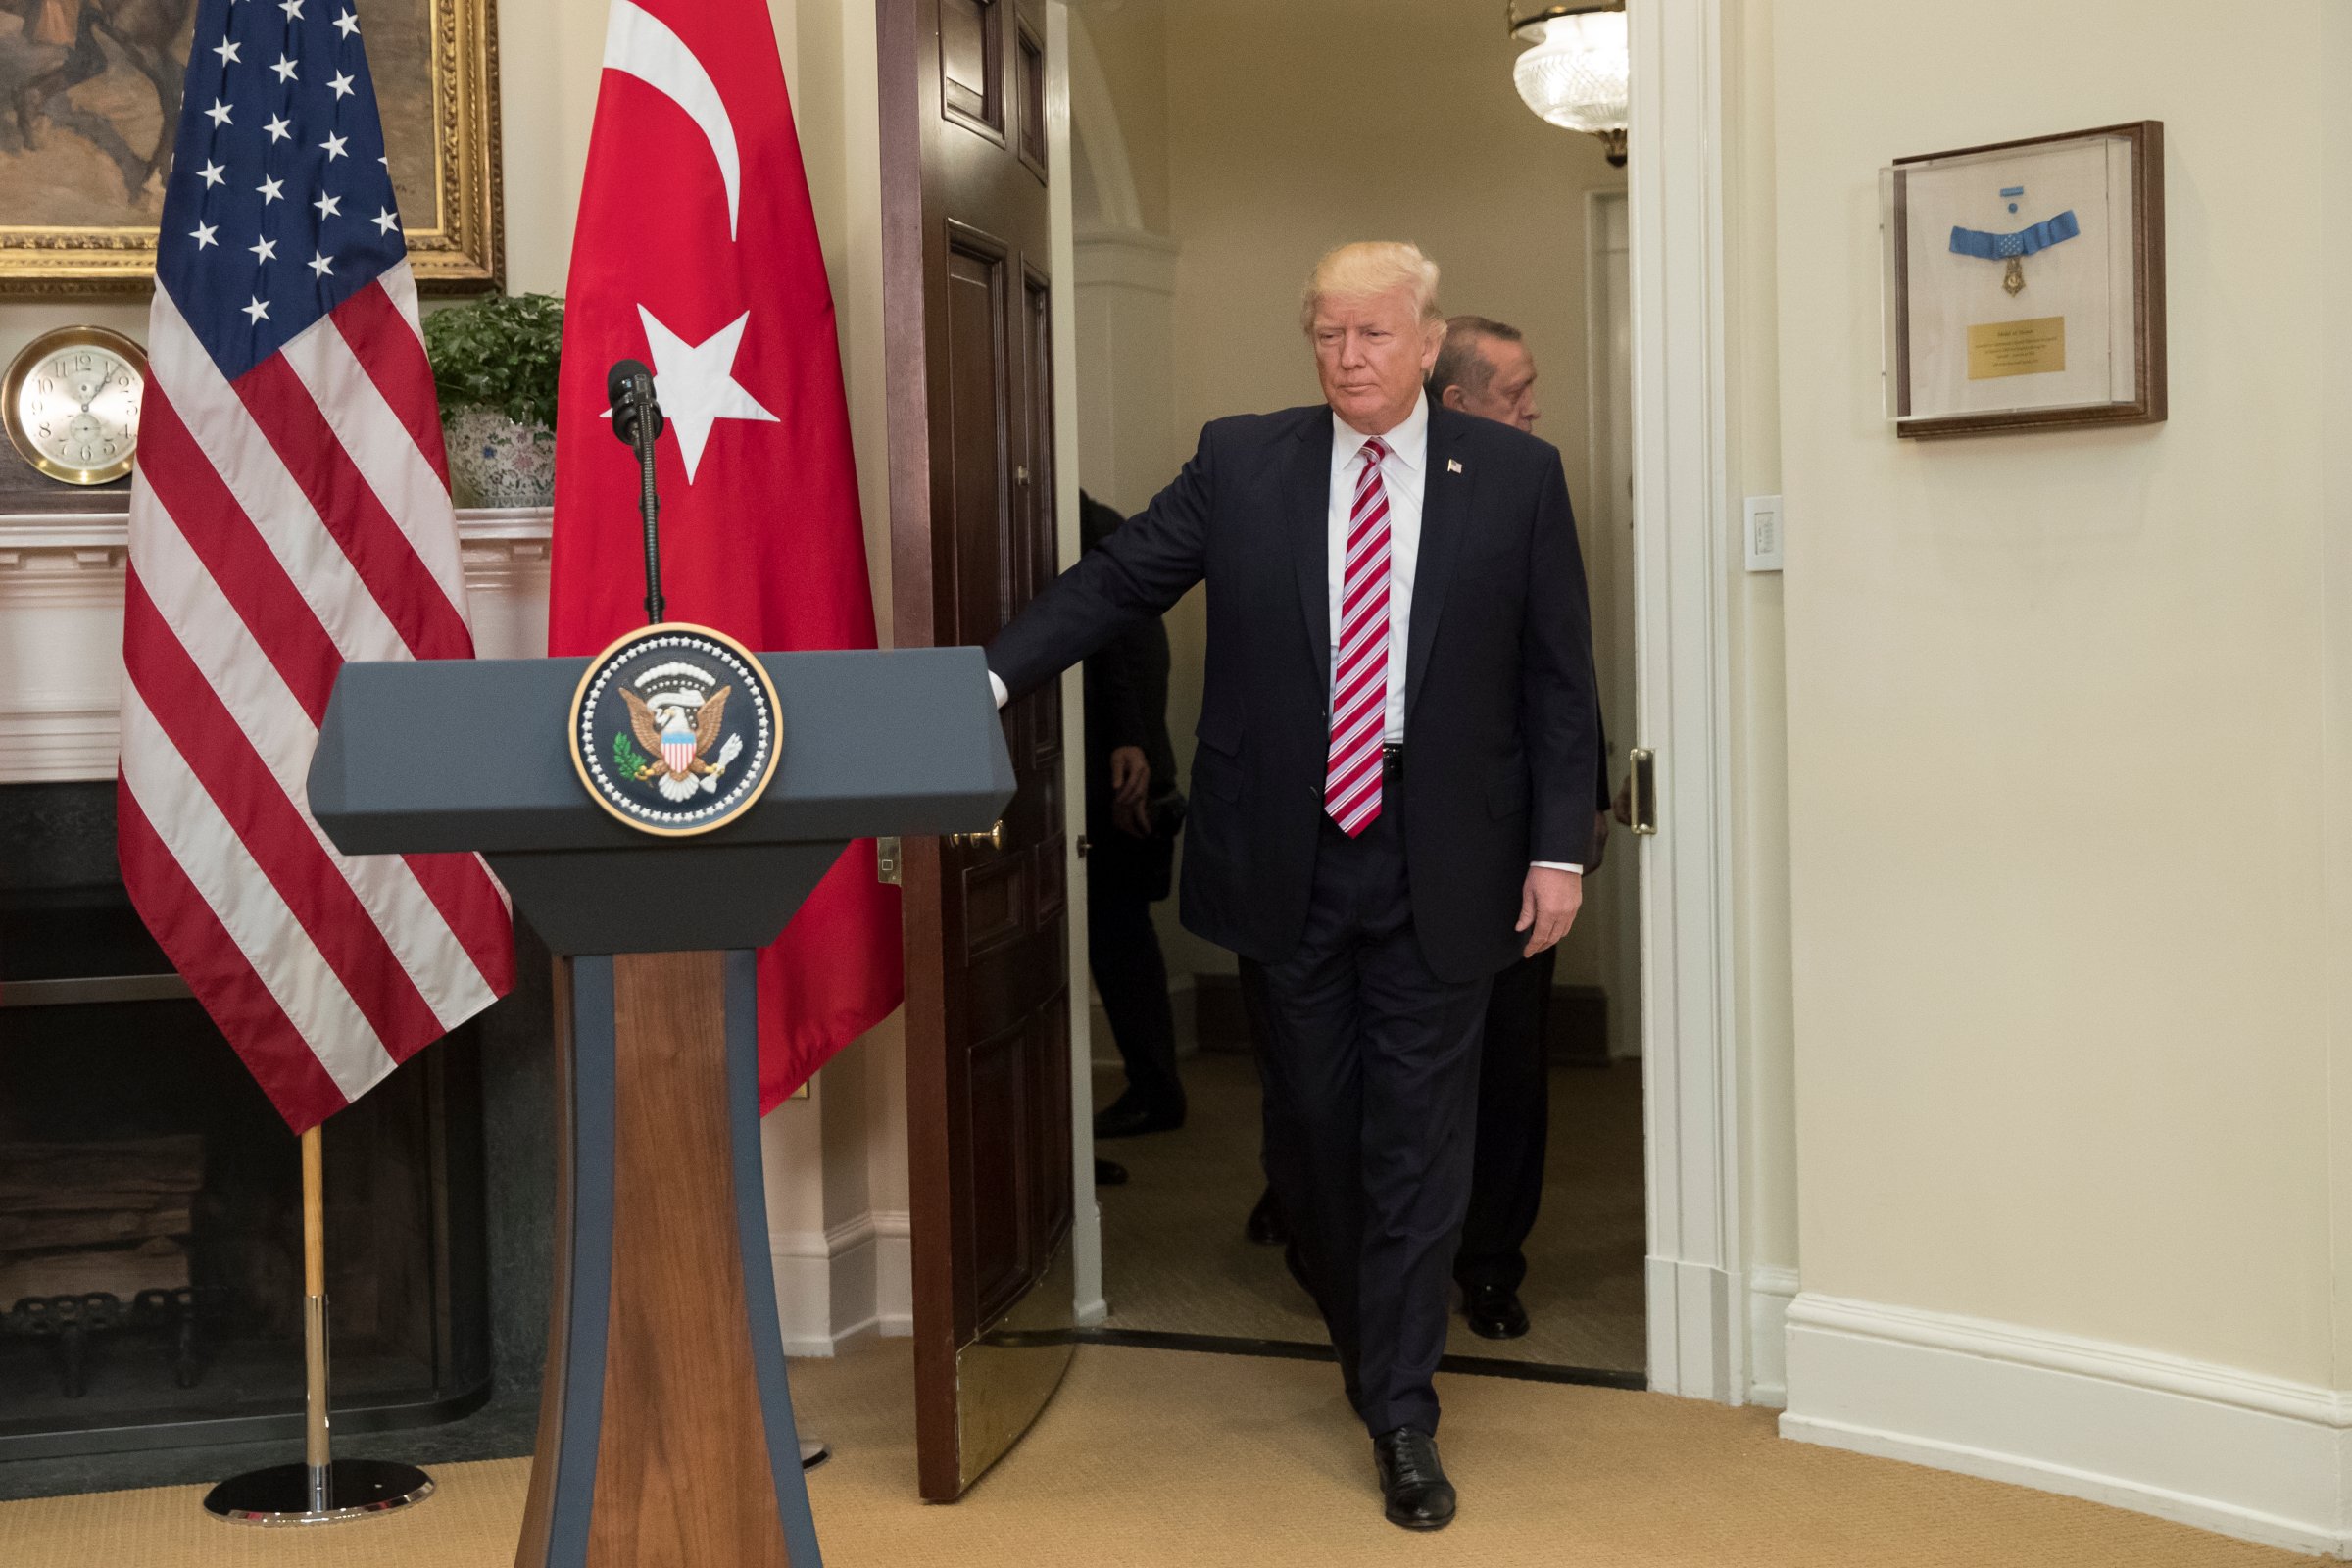 President Trump Hosts Turkey's President Erdogan At The White House